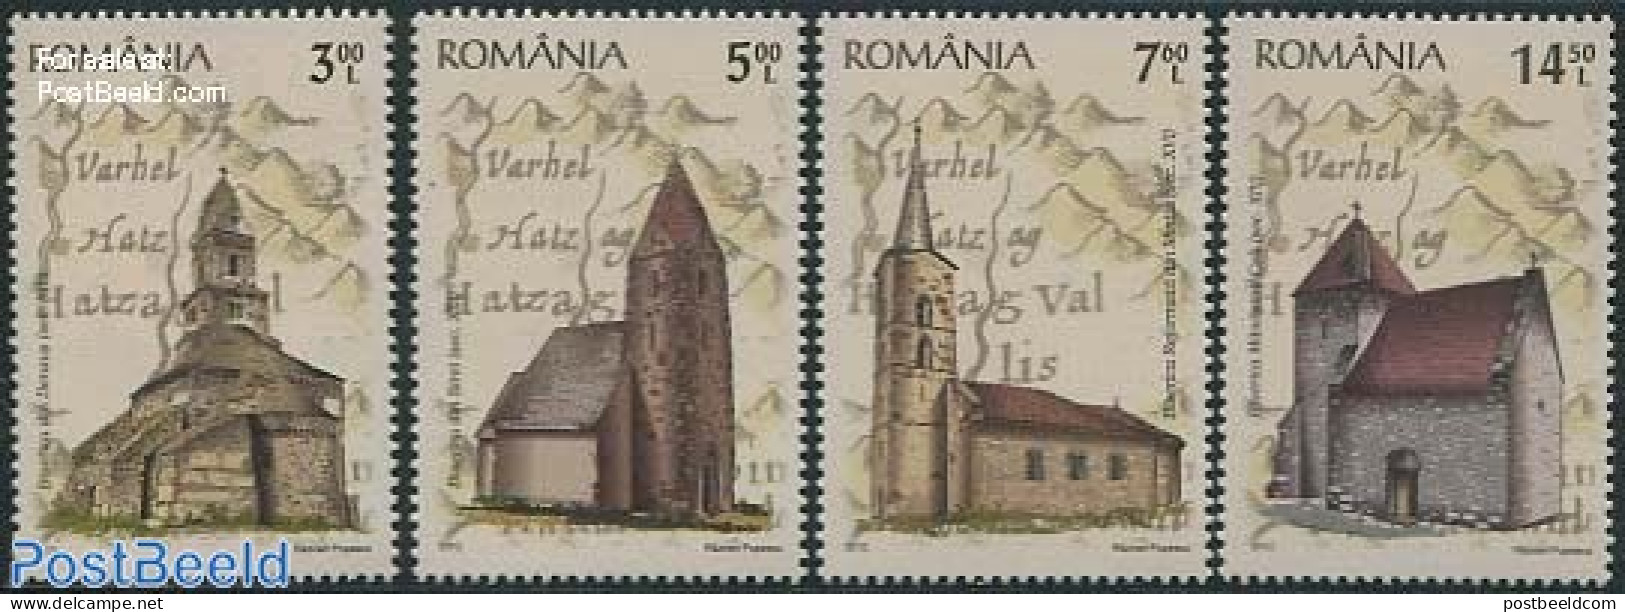 Romania 2012 Tara Hategului Church 4v, Mint NH, Religion - Churches, Temples, Mosques, Synagogues - Nuevos